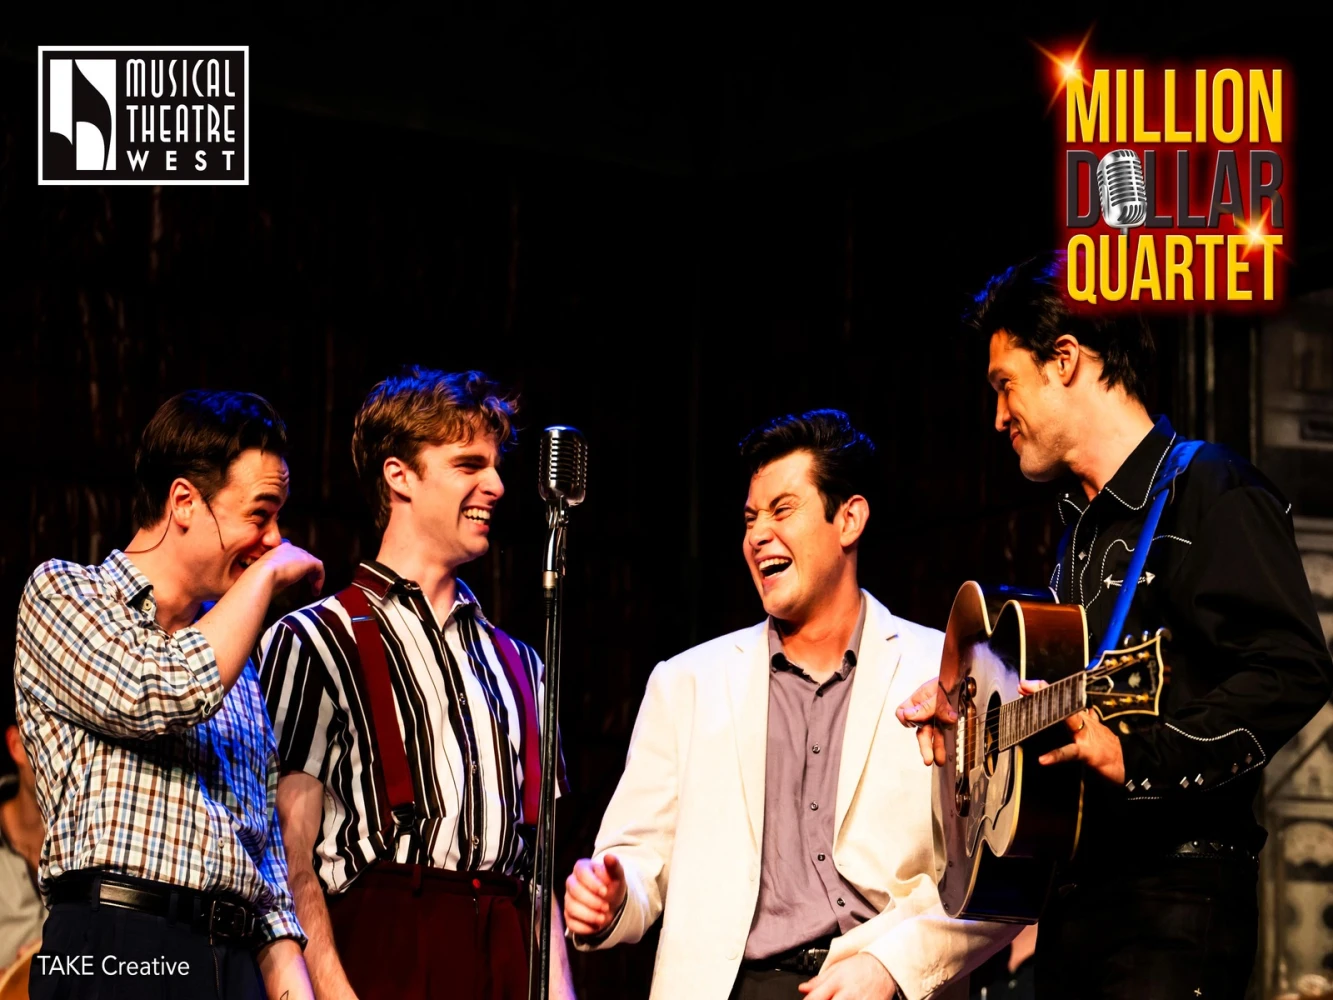 Million Dollar Quartet: What to expect - 5